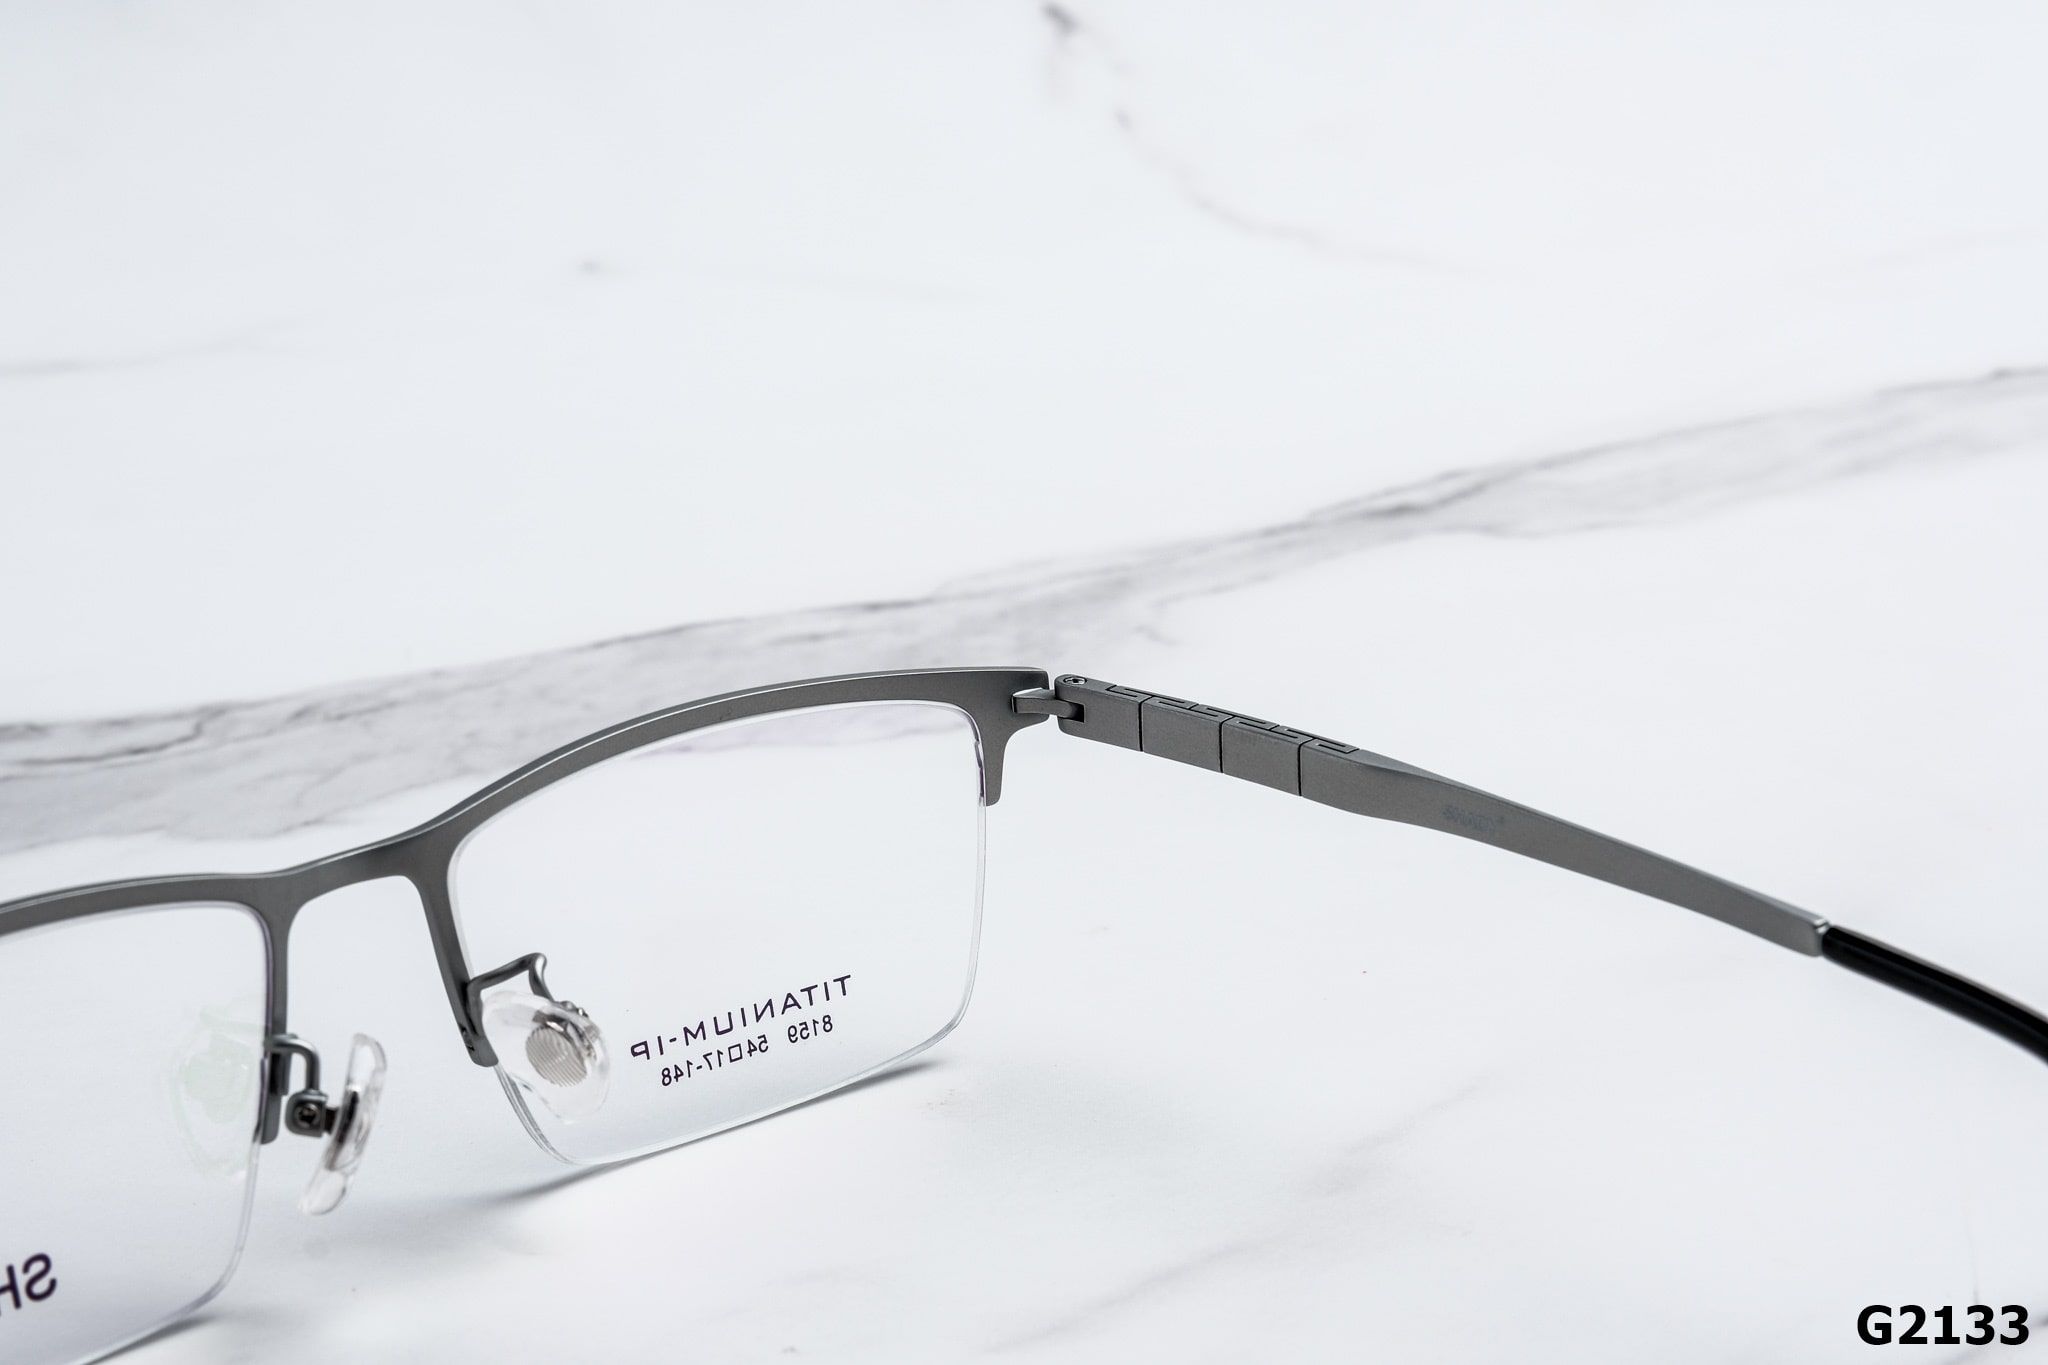  SHADY Eyewear - Glasses - G2133 